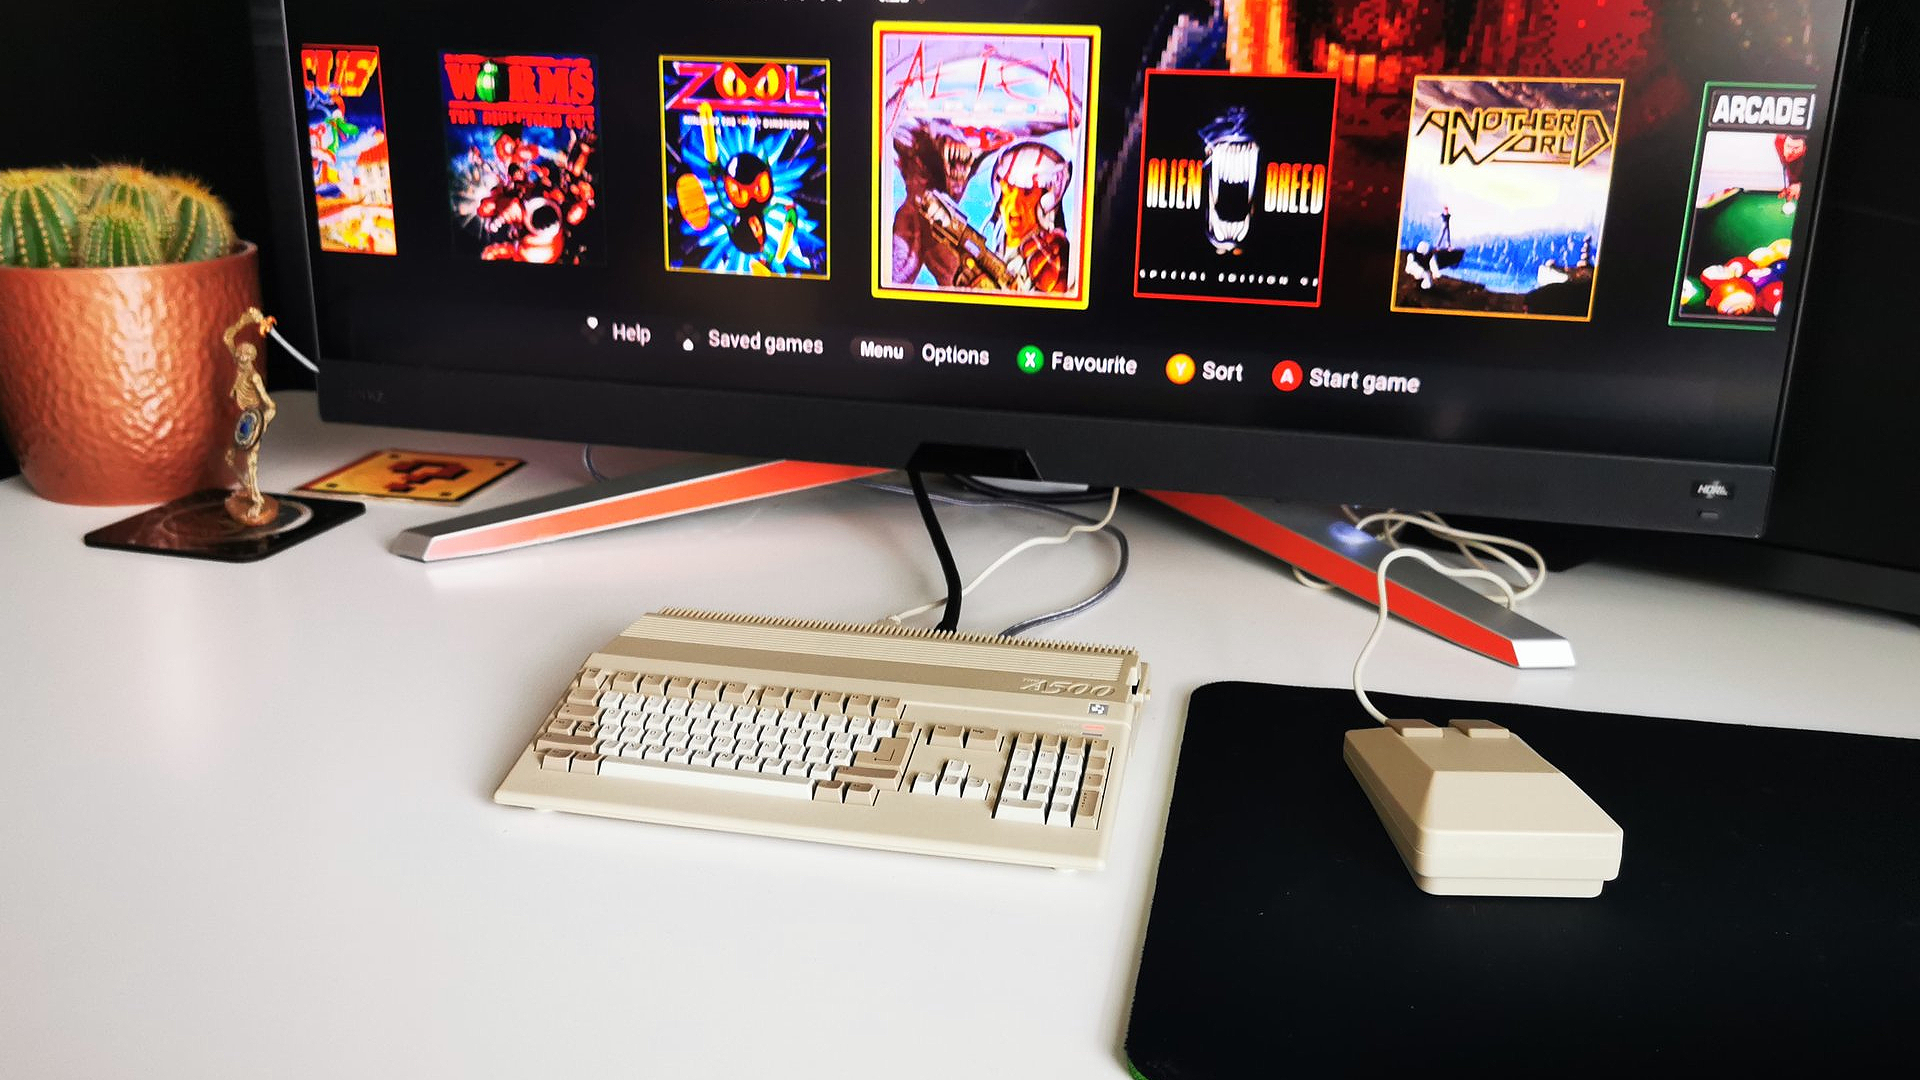 A500 Mini review: An imperfect Amiga retro gaming PC capsule